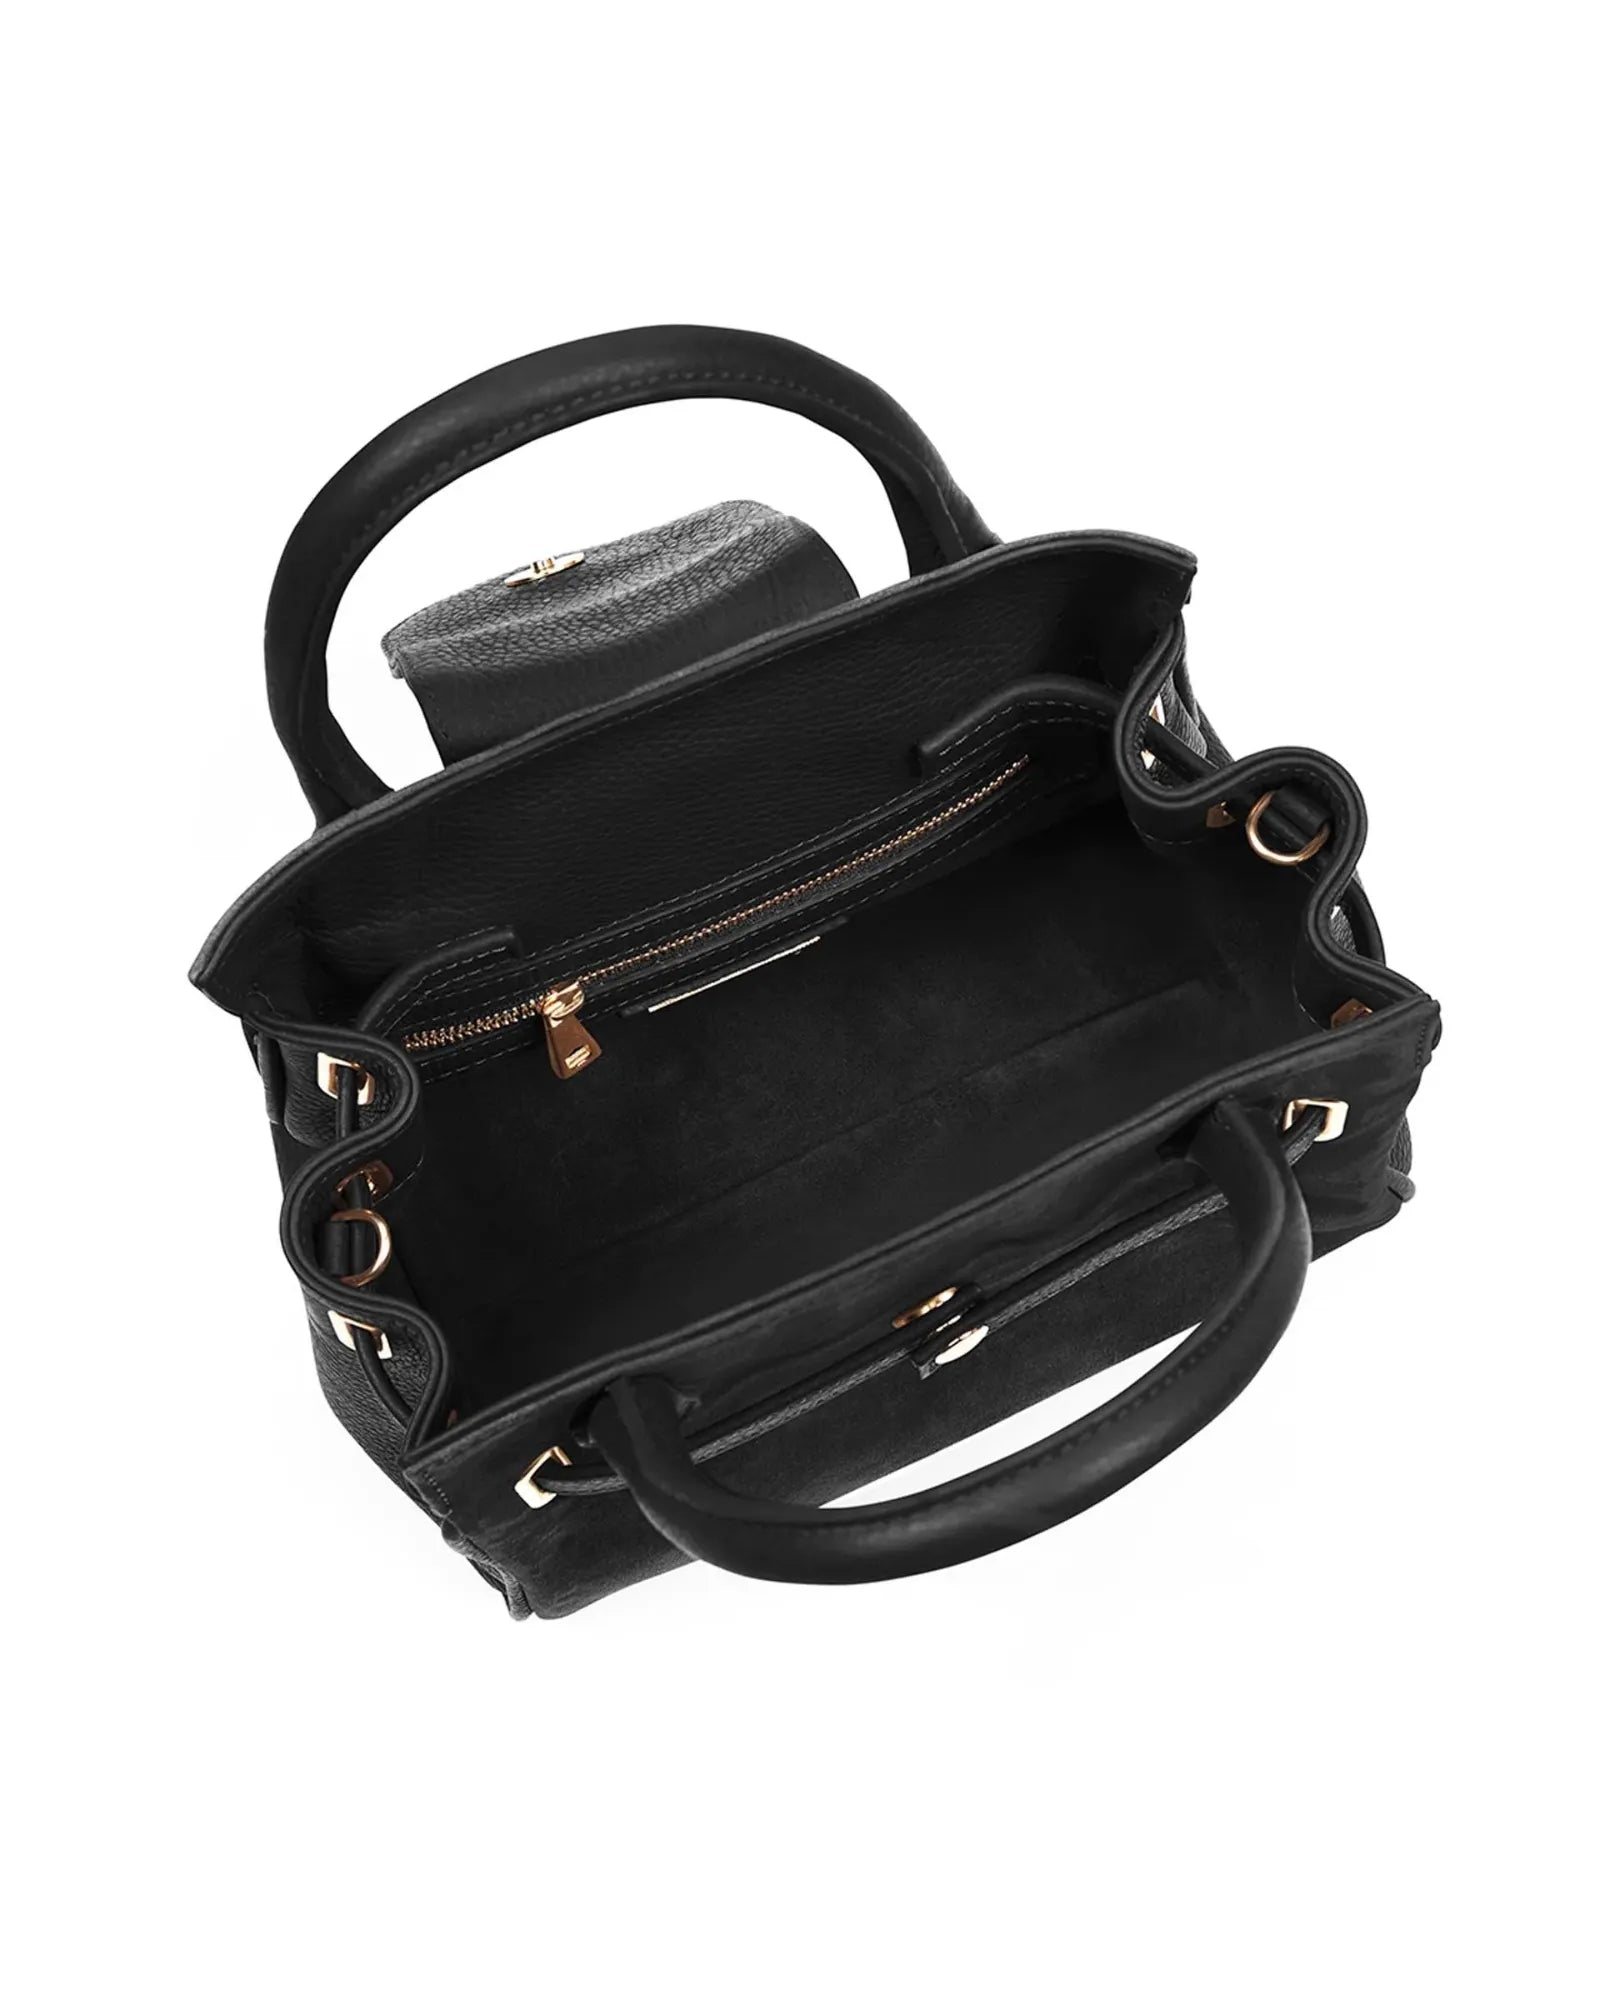 The Mini Windsor Handbag in Black Suede